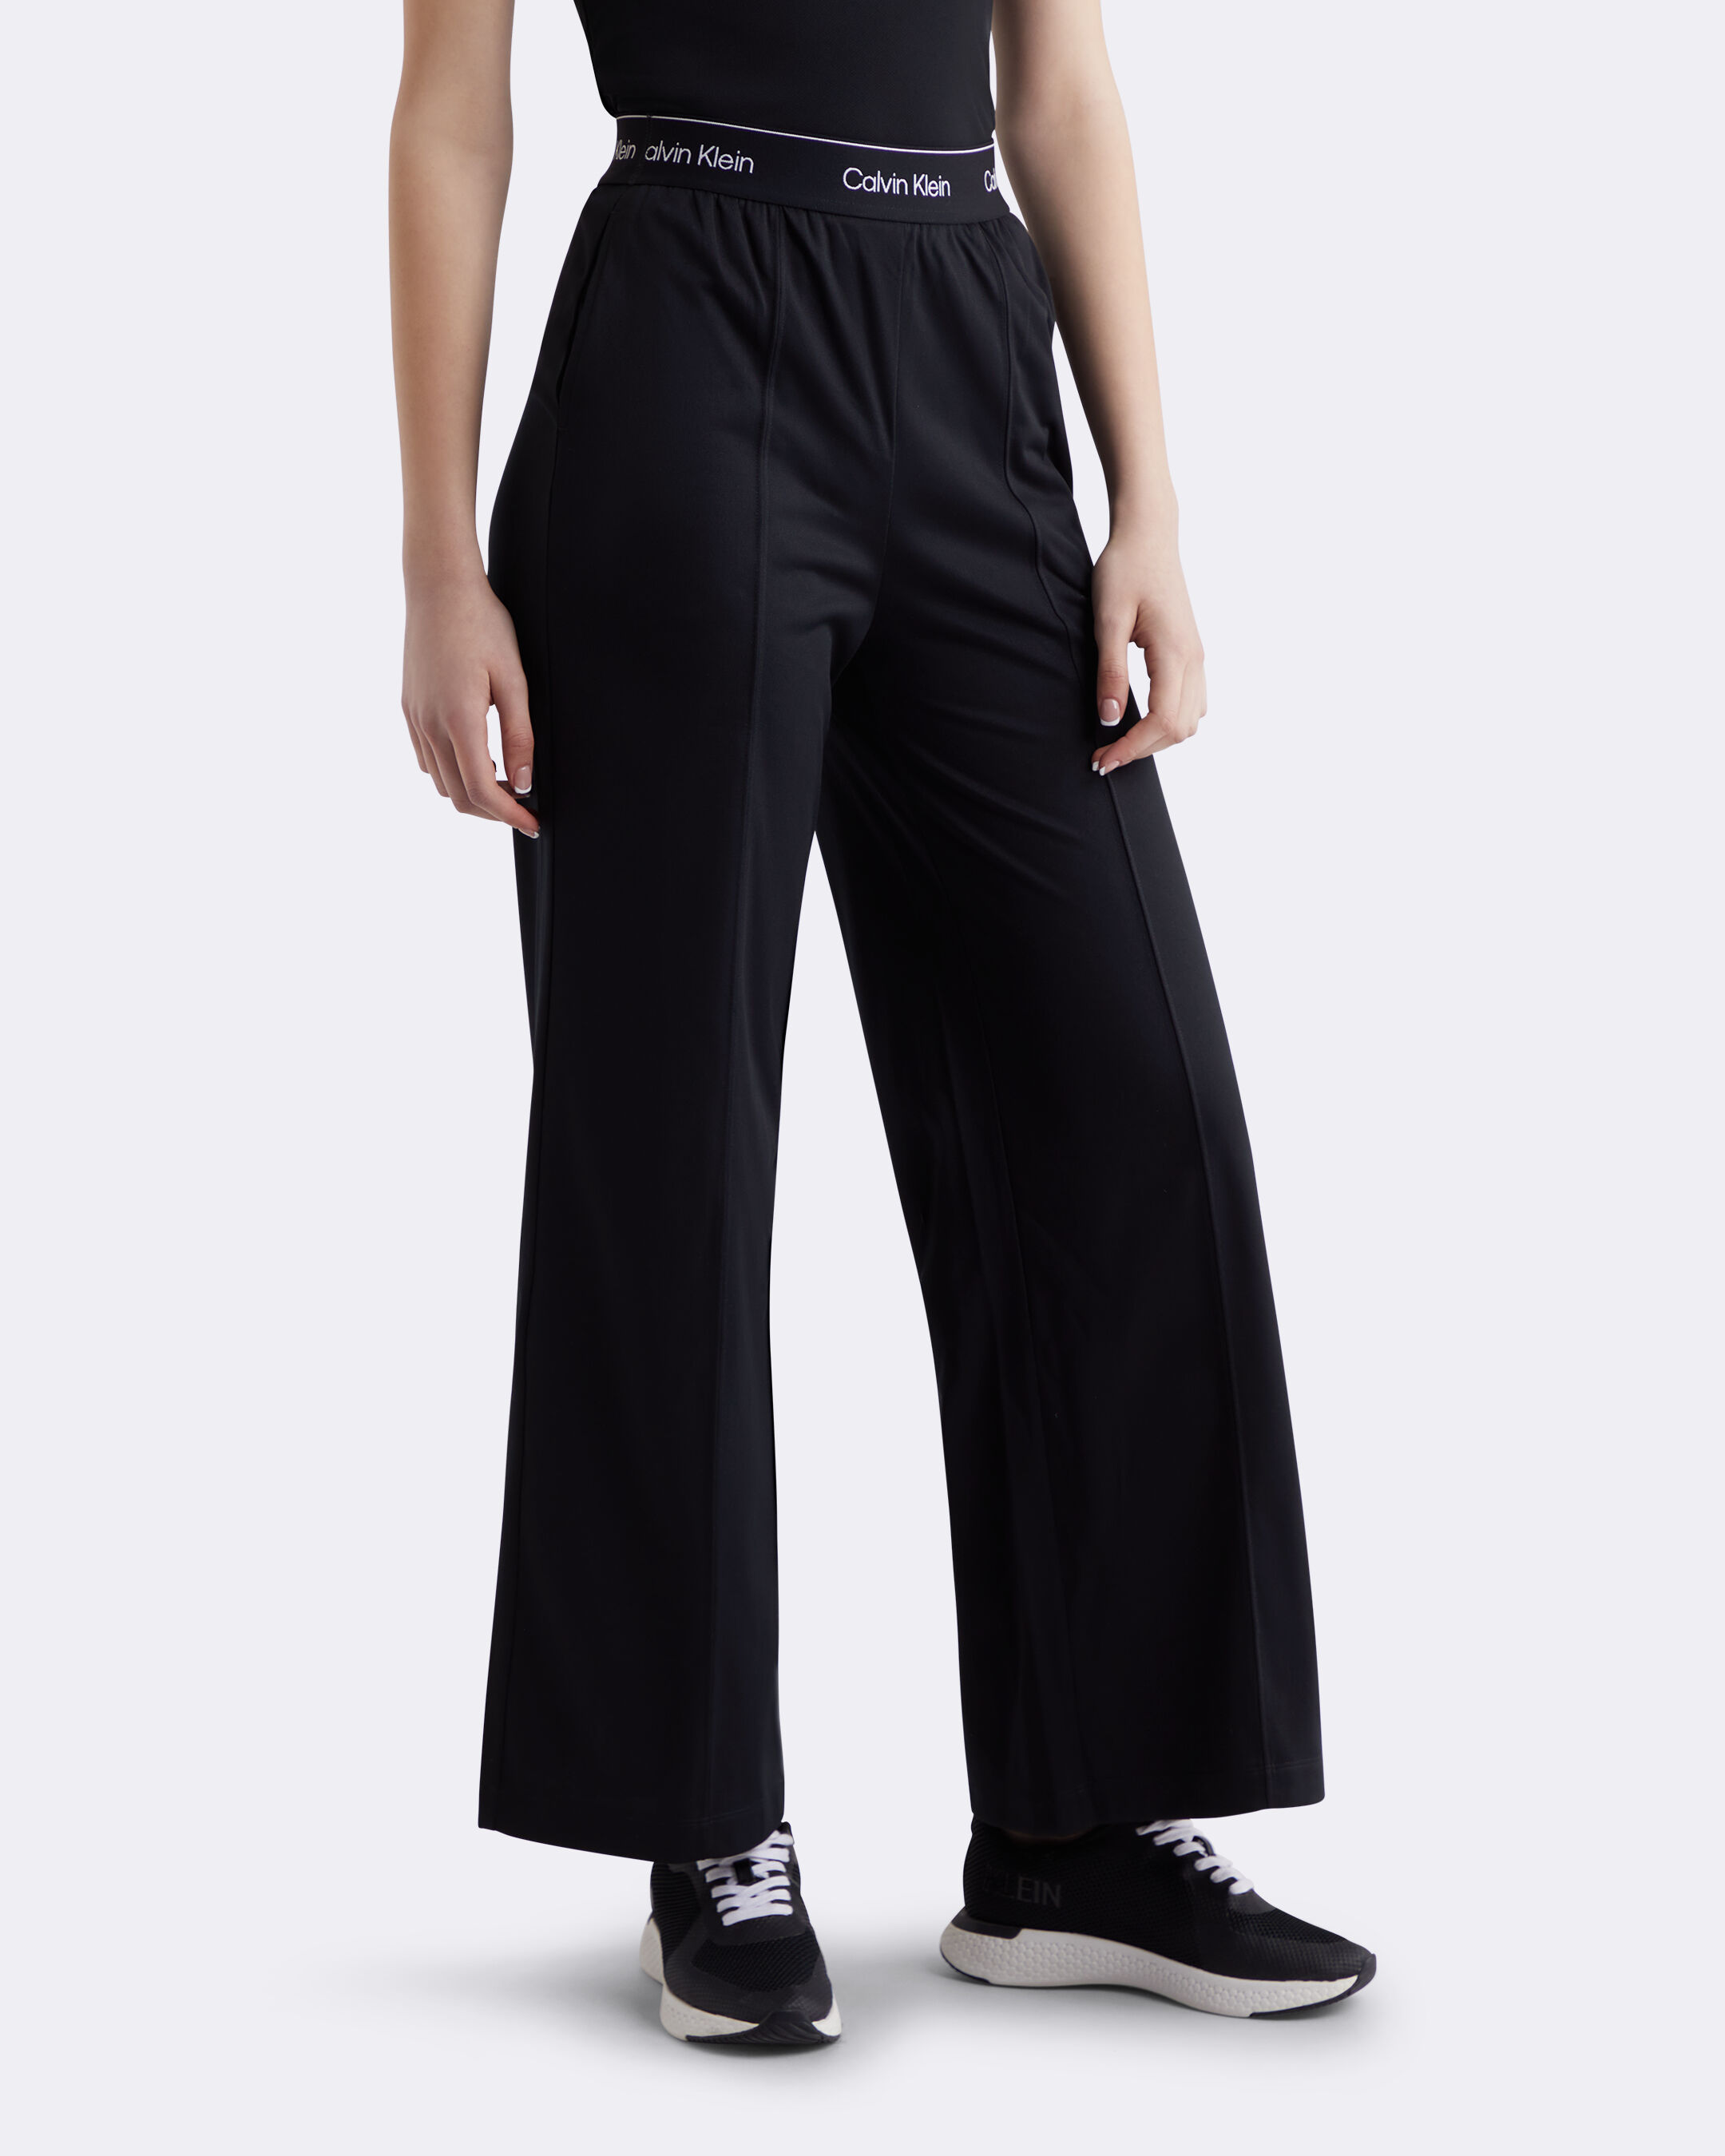 PVH/CALVIN KLEIN JEANS Pants & Jeans for Women | Costco